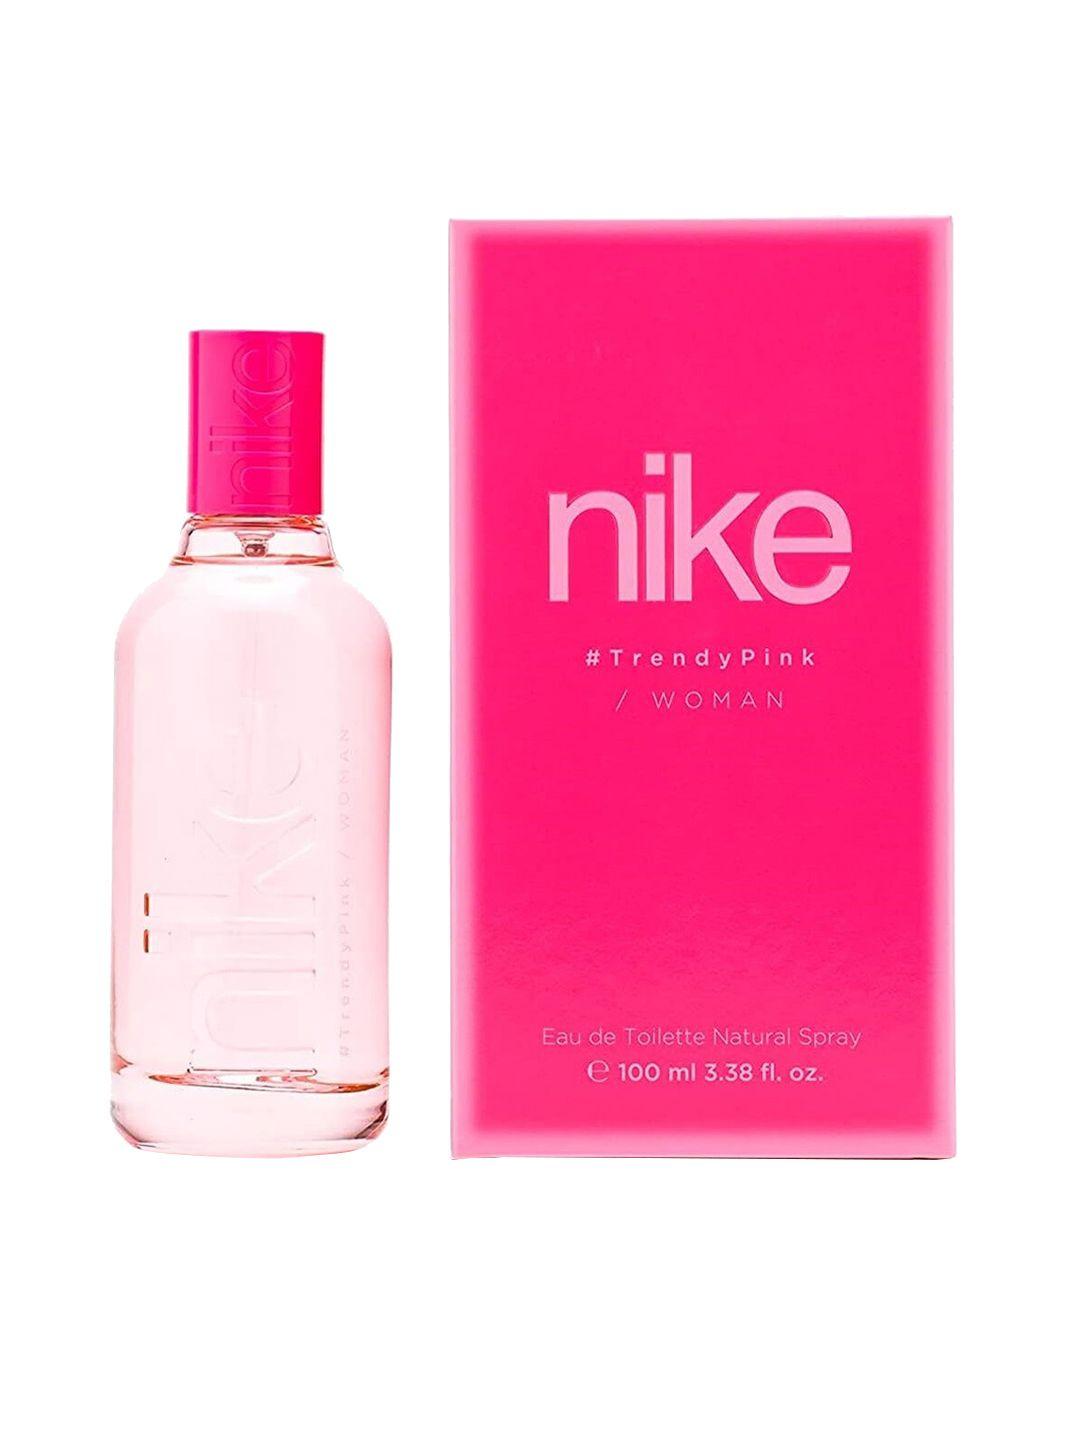 nike fragrances women trendy pink eau de toilette natural spray - 100ml